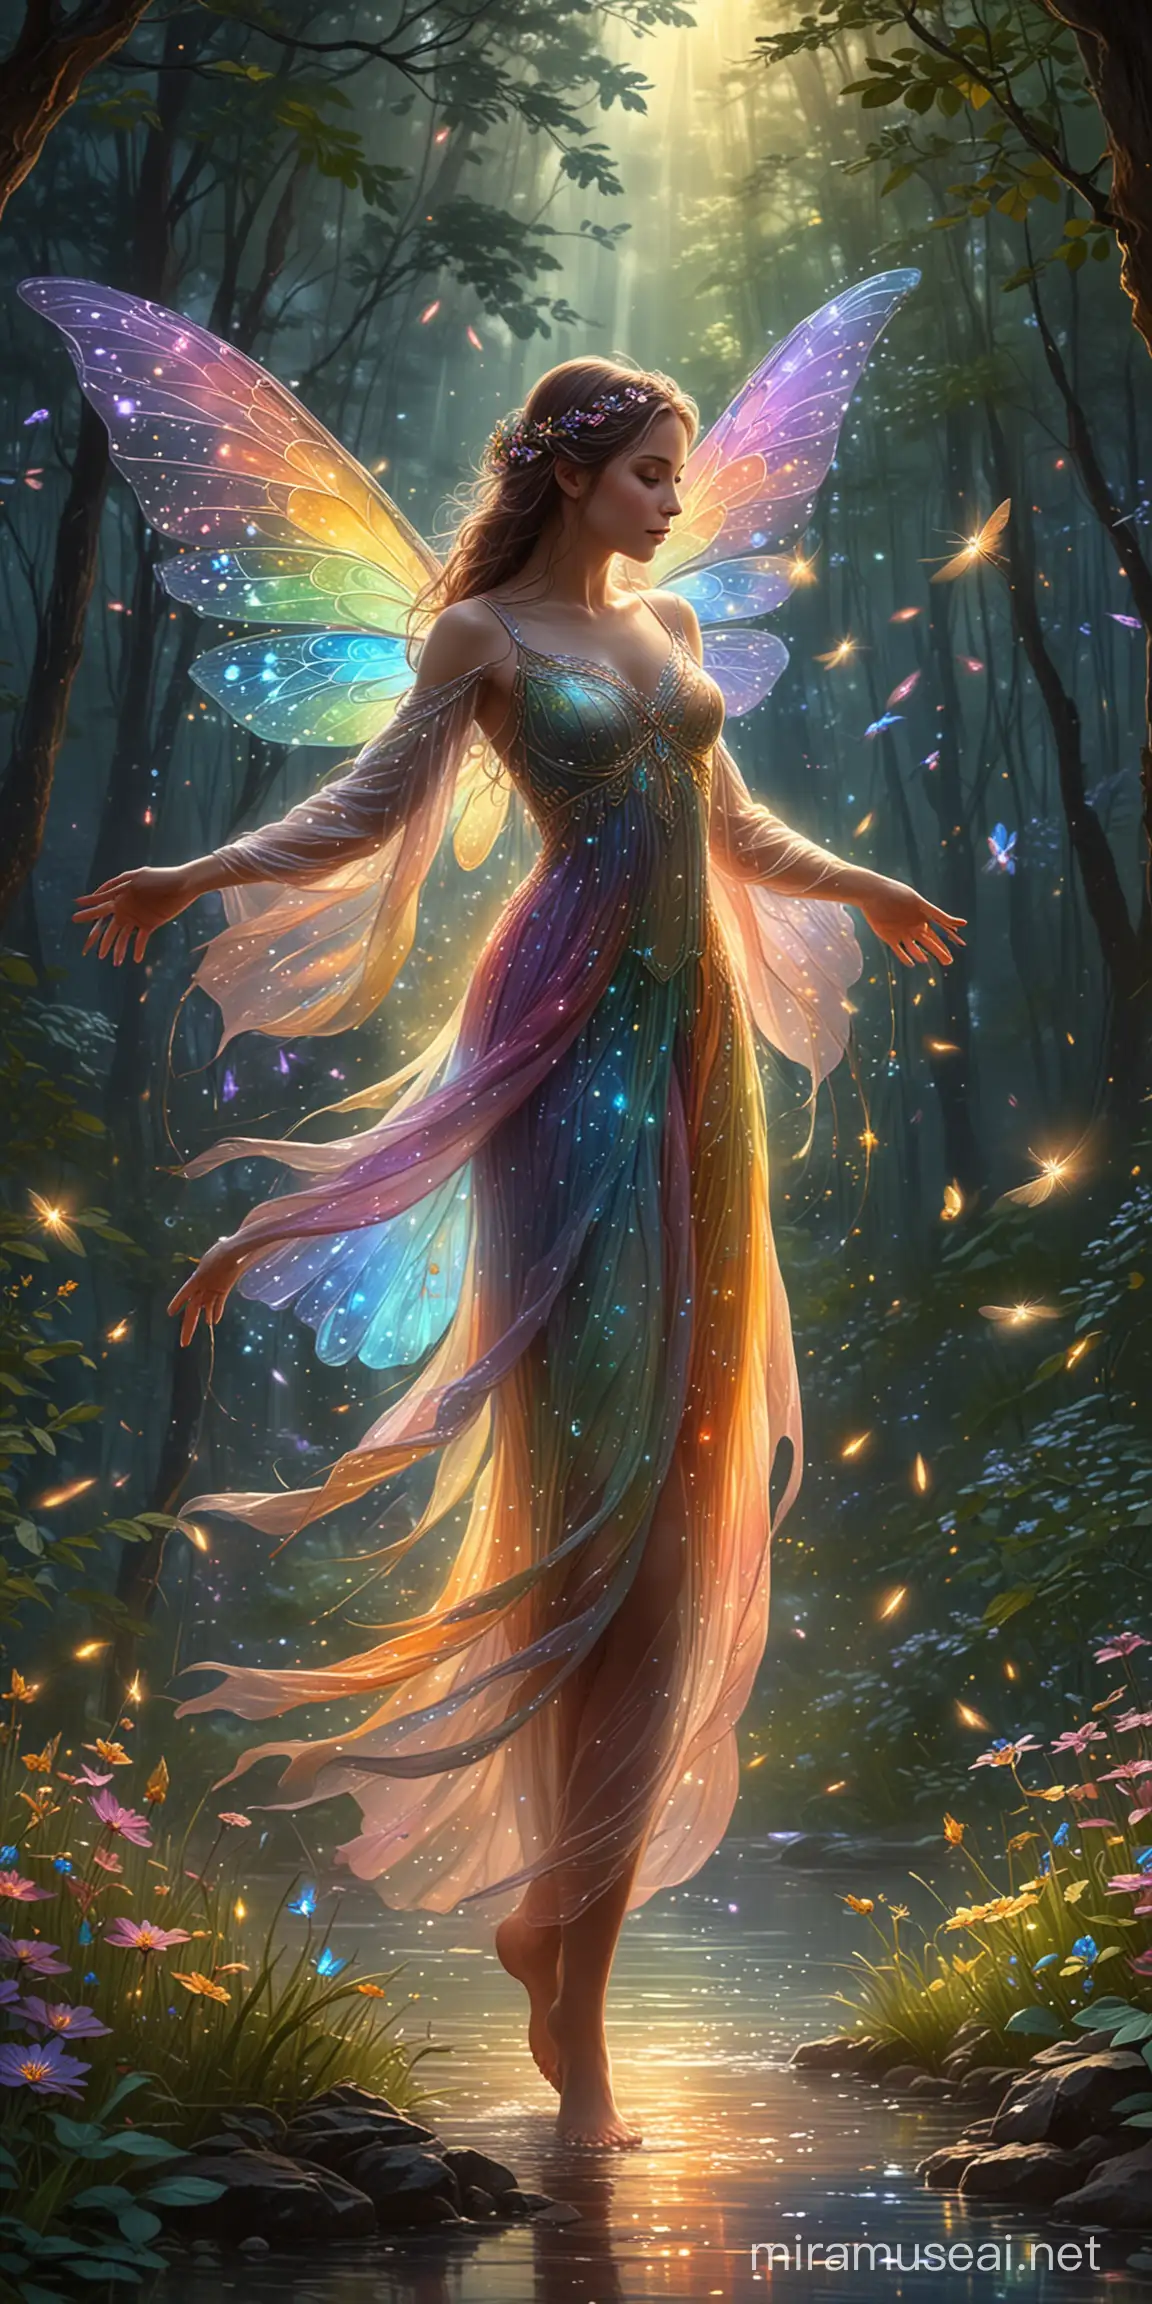 Enchanting Fairy Dancing with Fireflies in Radiant Rainbow Glow